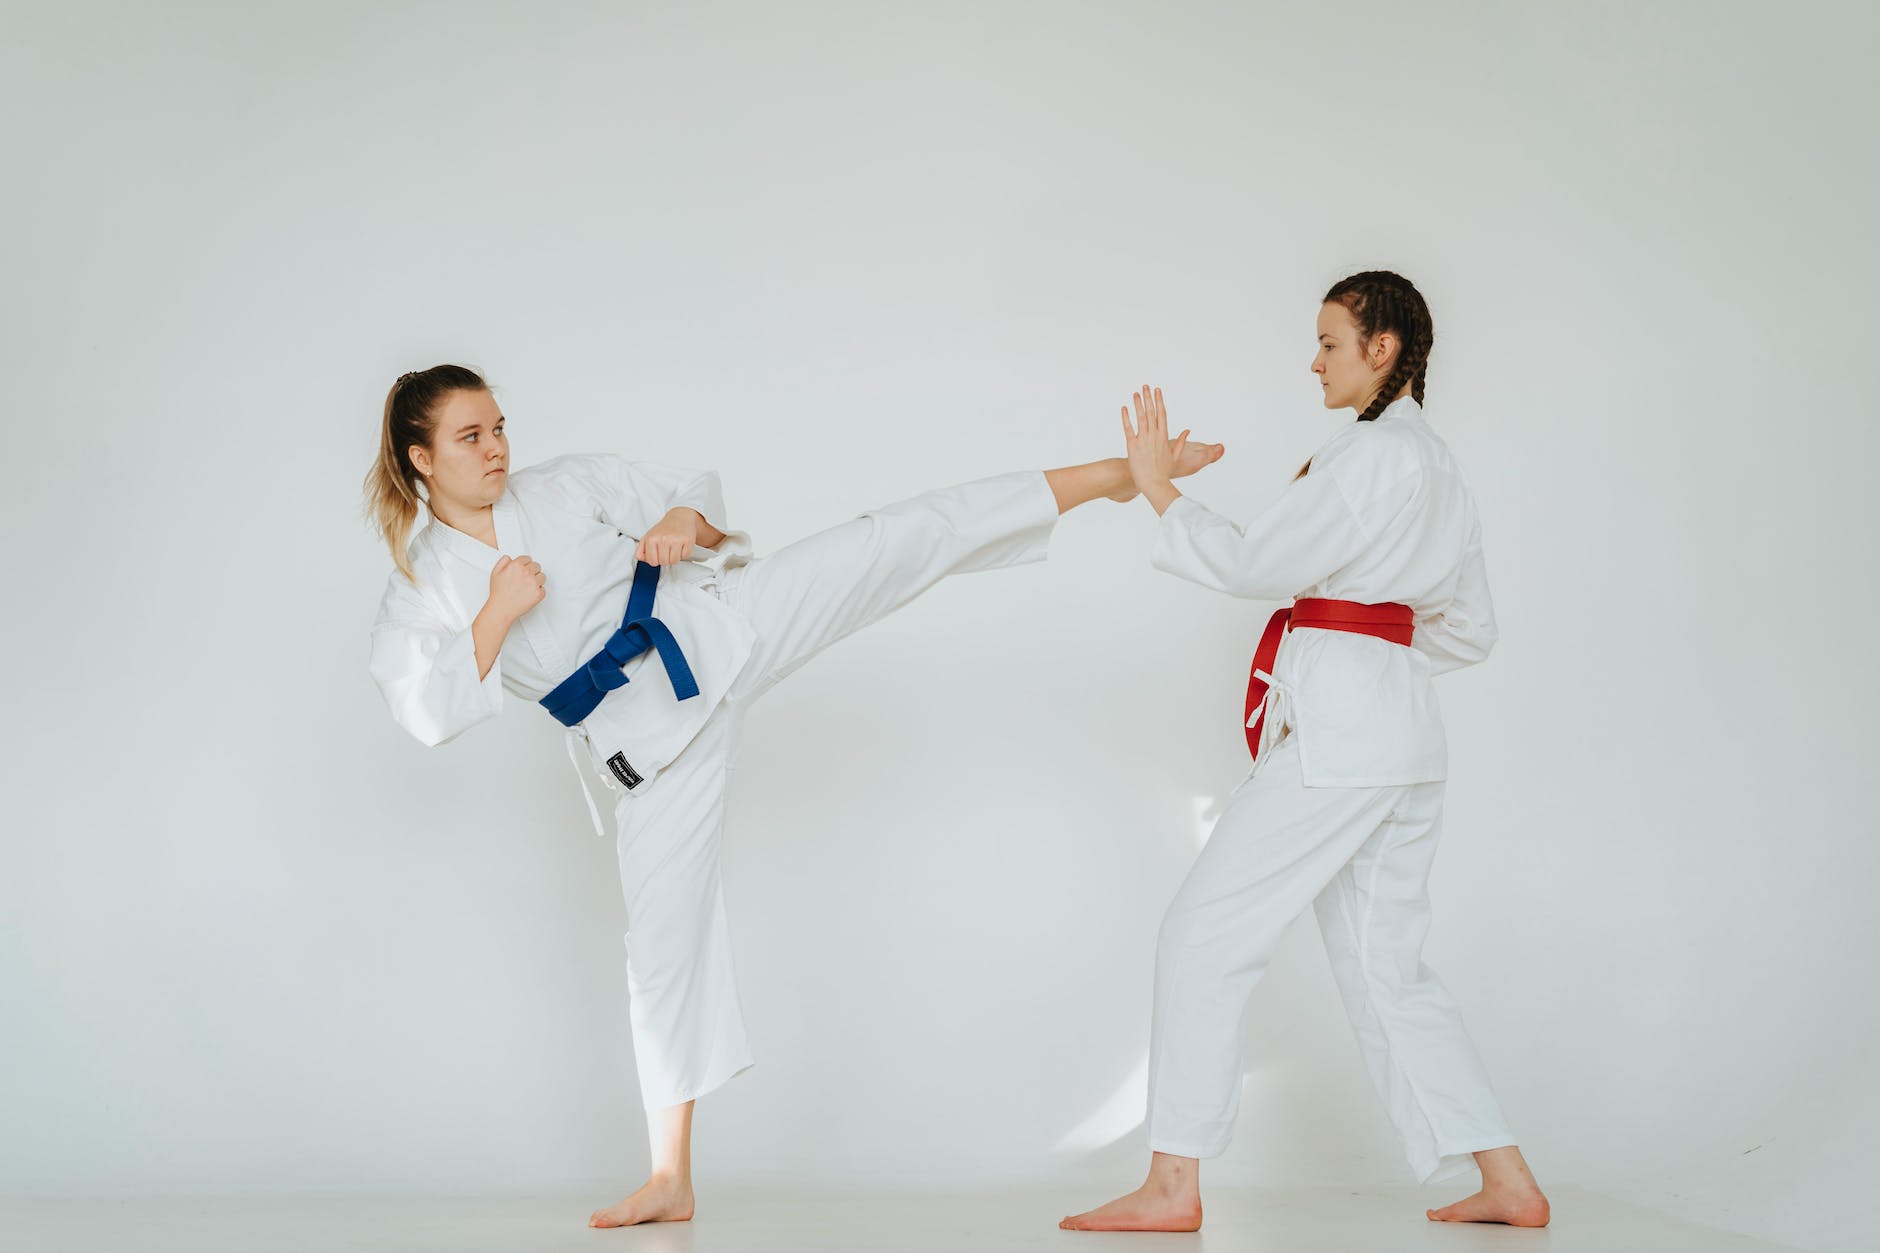 girls in uniforms practicing karate